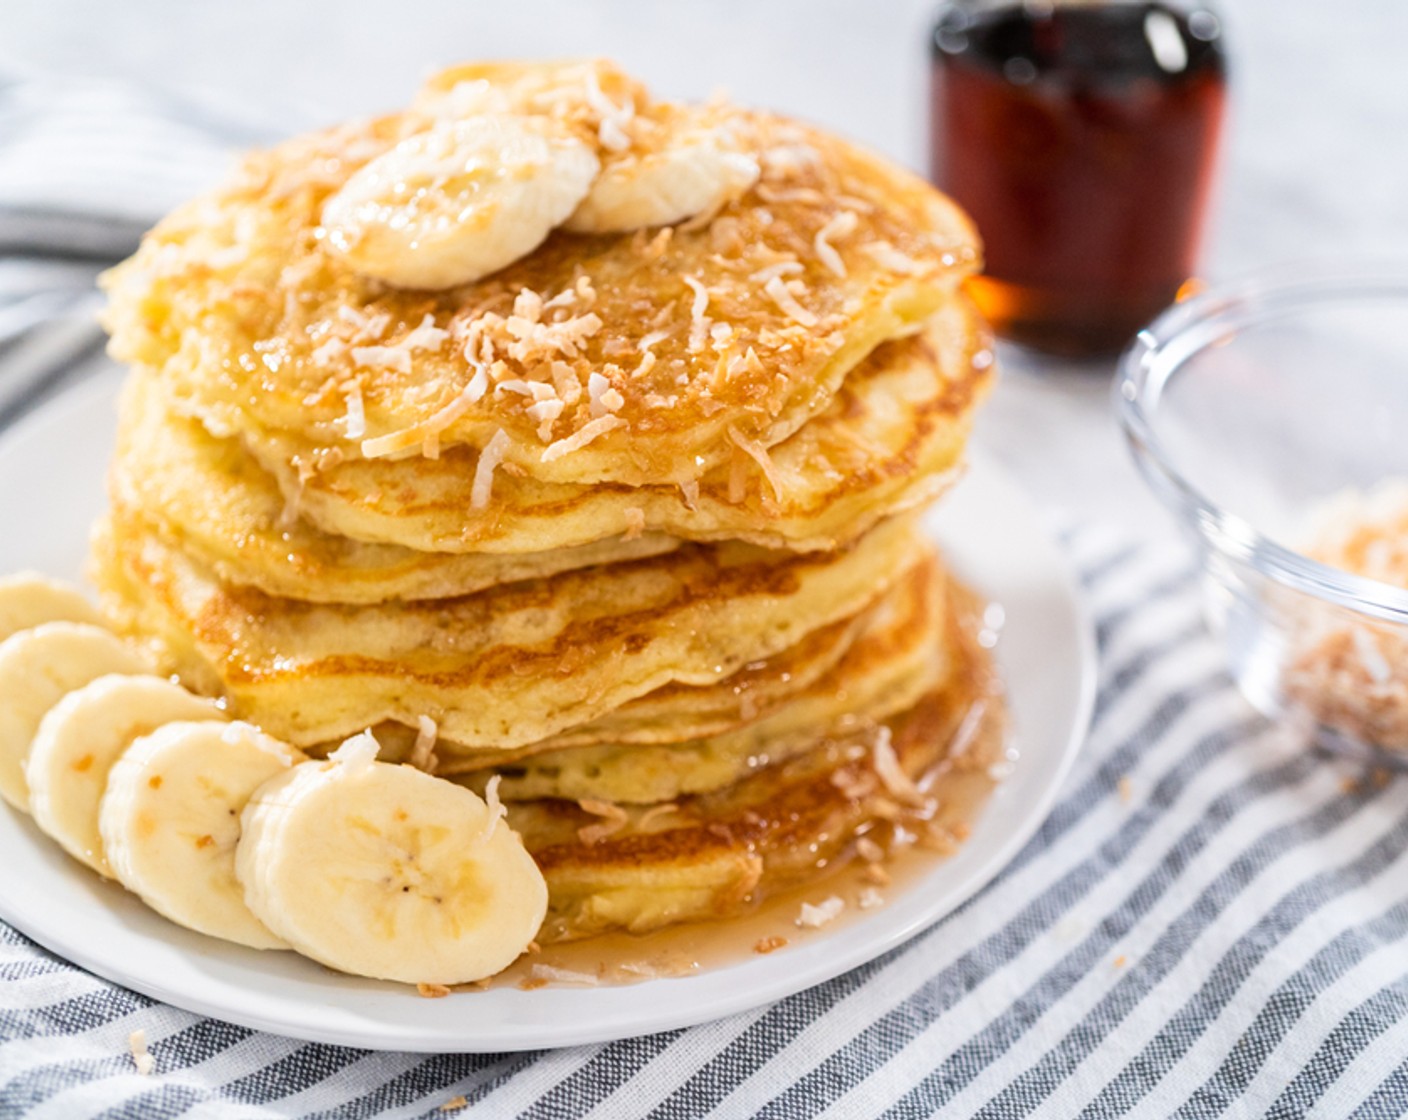 Share 60 kuva dwayne johnson pancake recipe